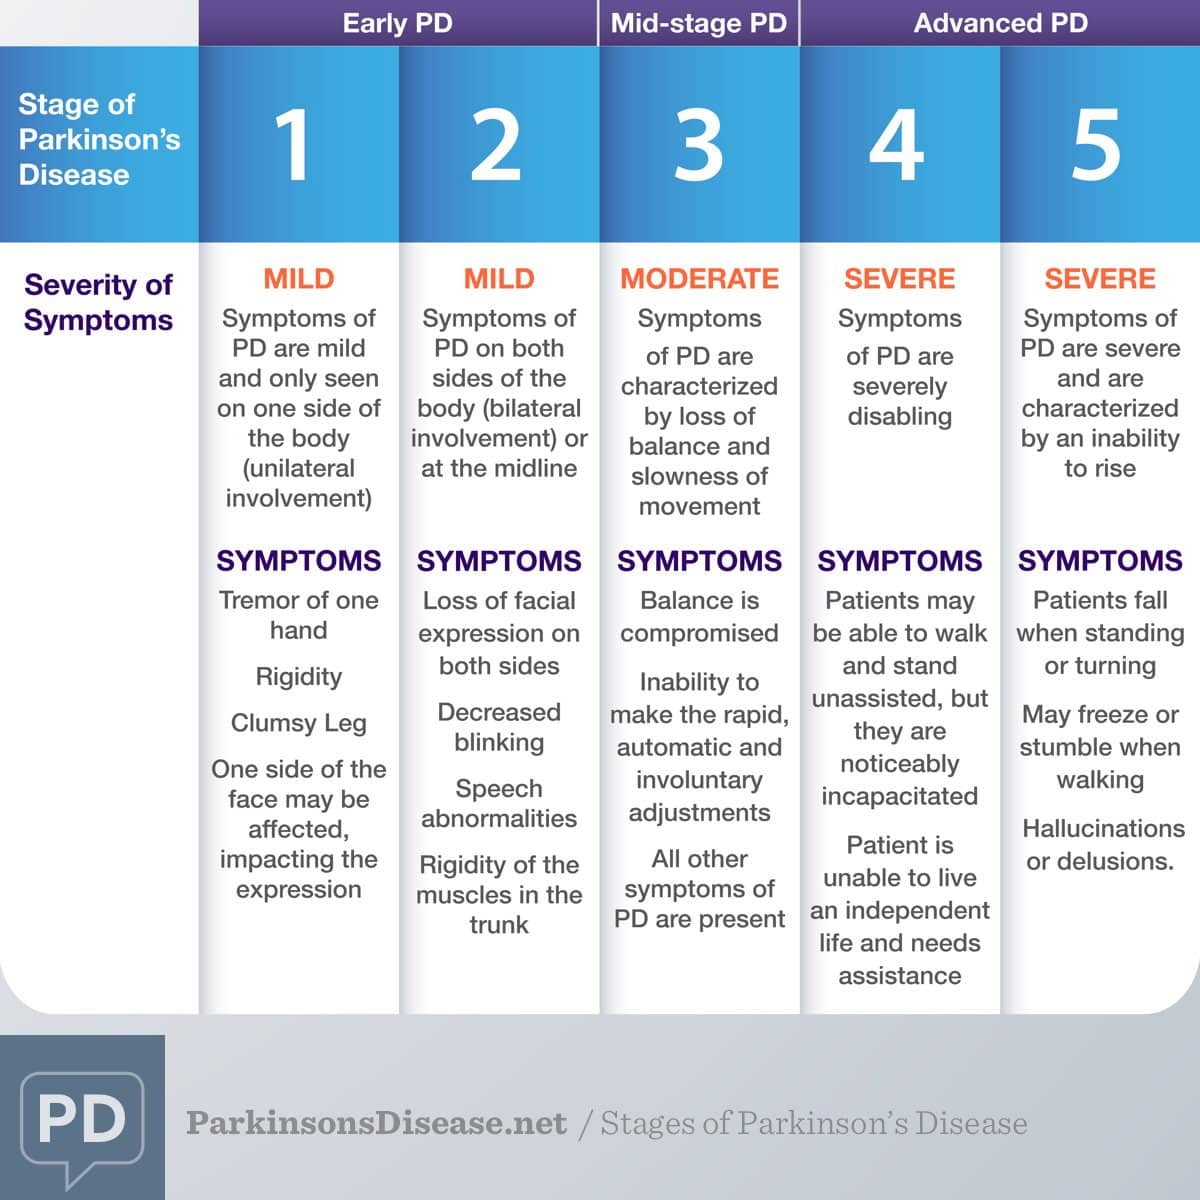 Stage 5 Parkinson